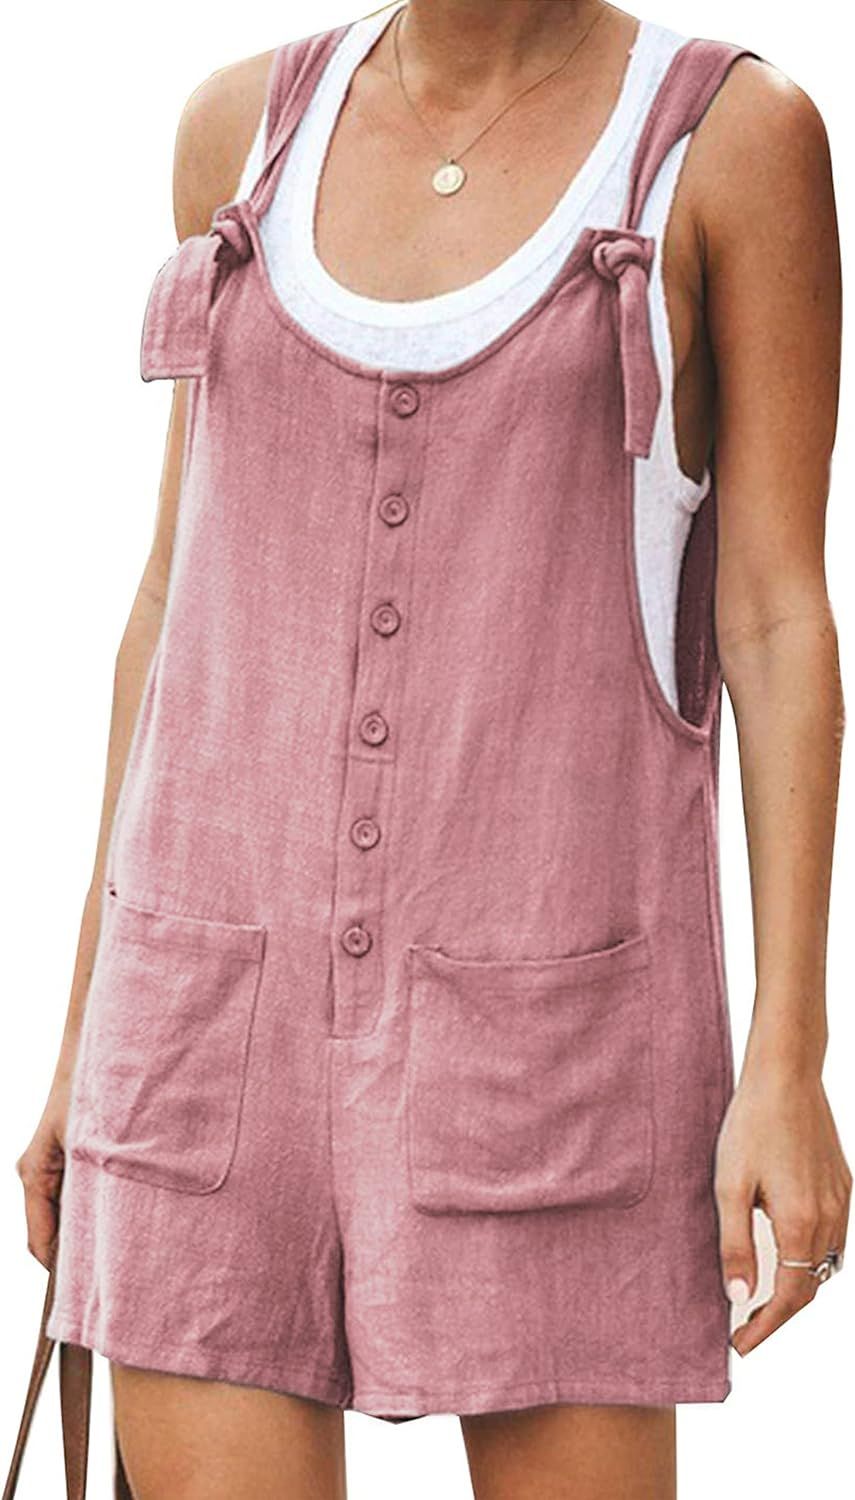 Yeokou Women's Casual Summer Cotton Linen Rompers Overalls Jumpsuit Shorts | Amazon (US)